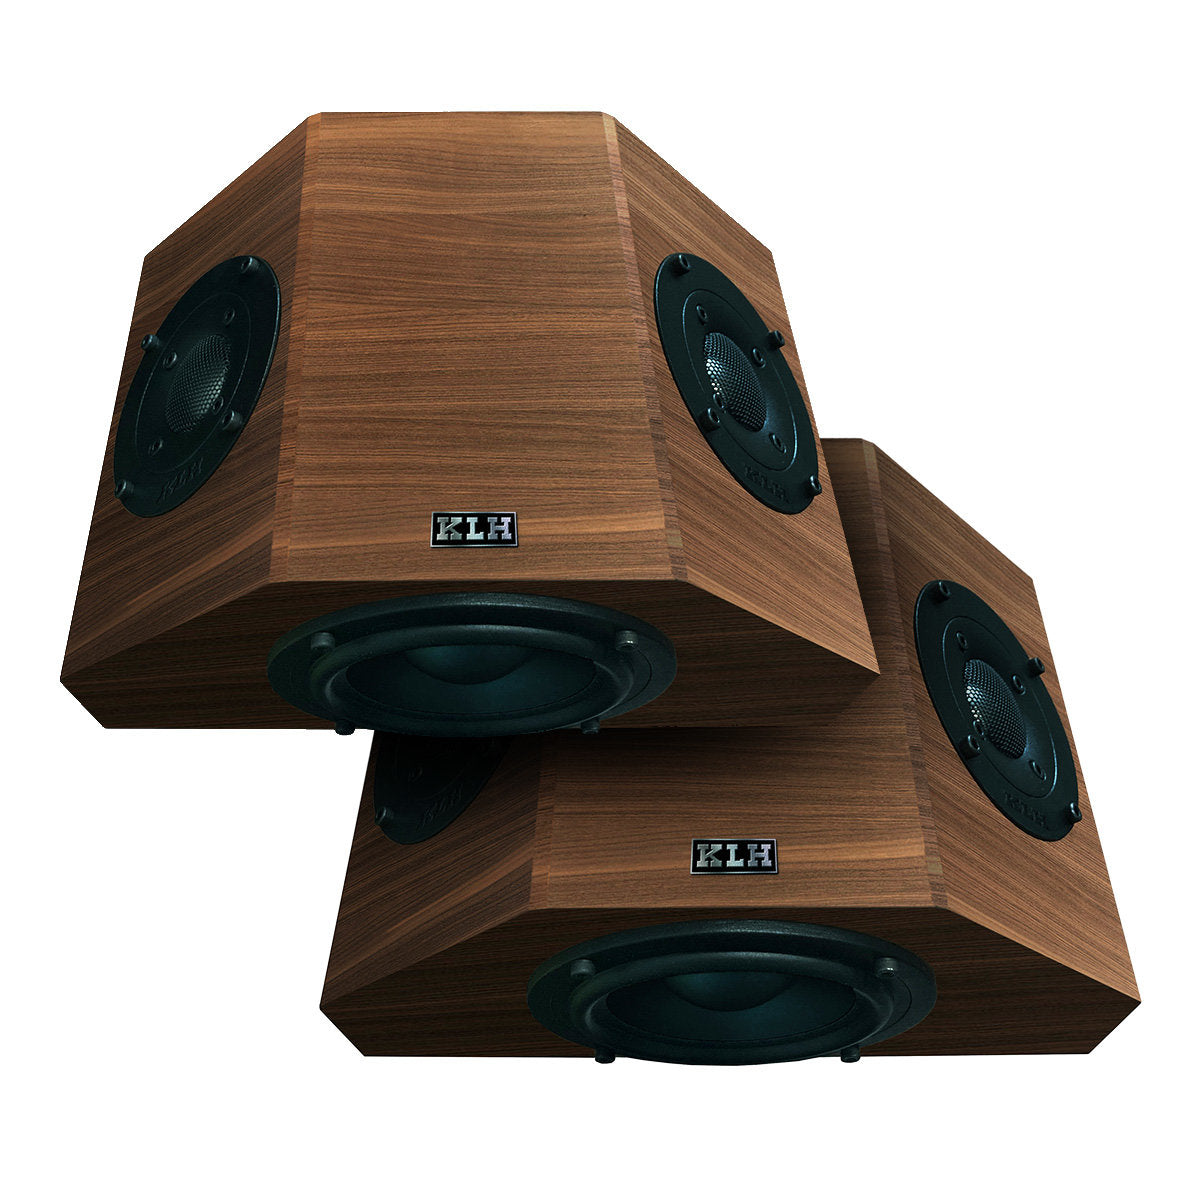 Kendall 2S Surround Sound Speakers